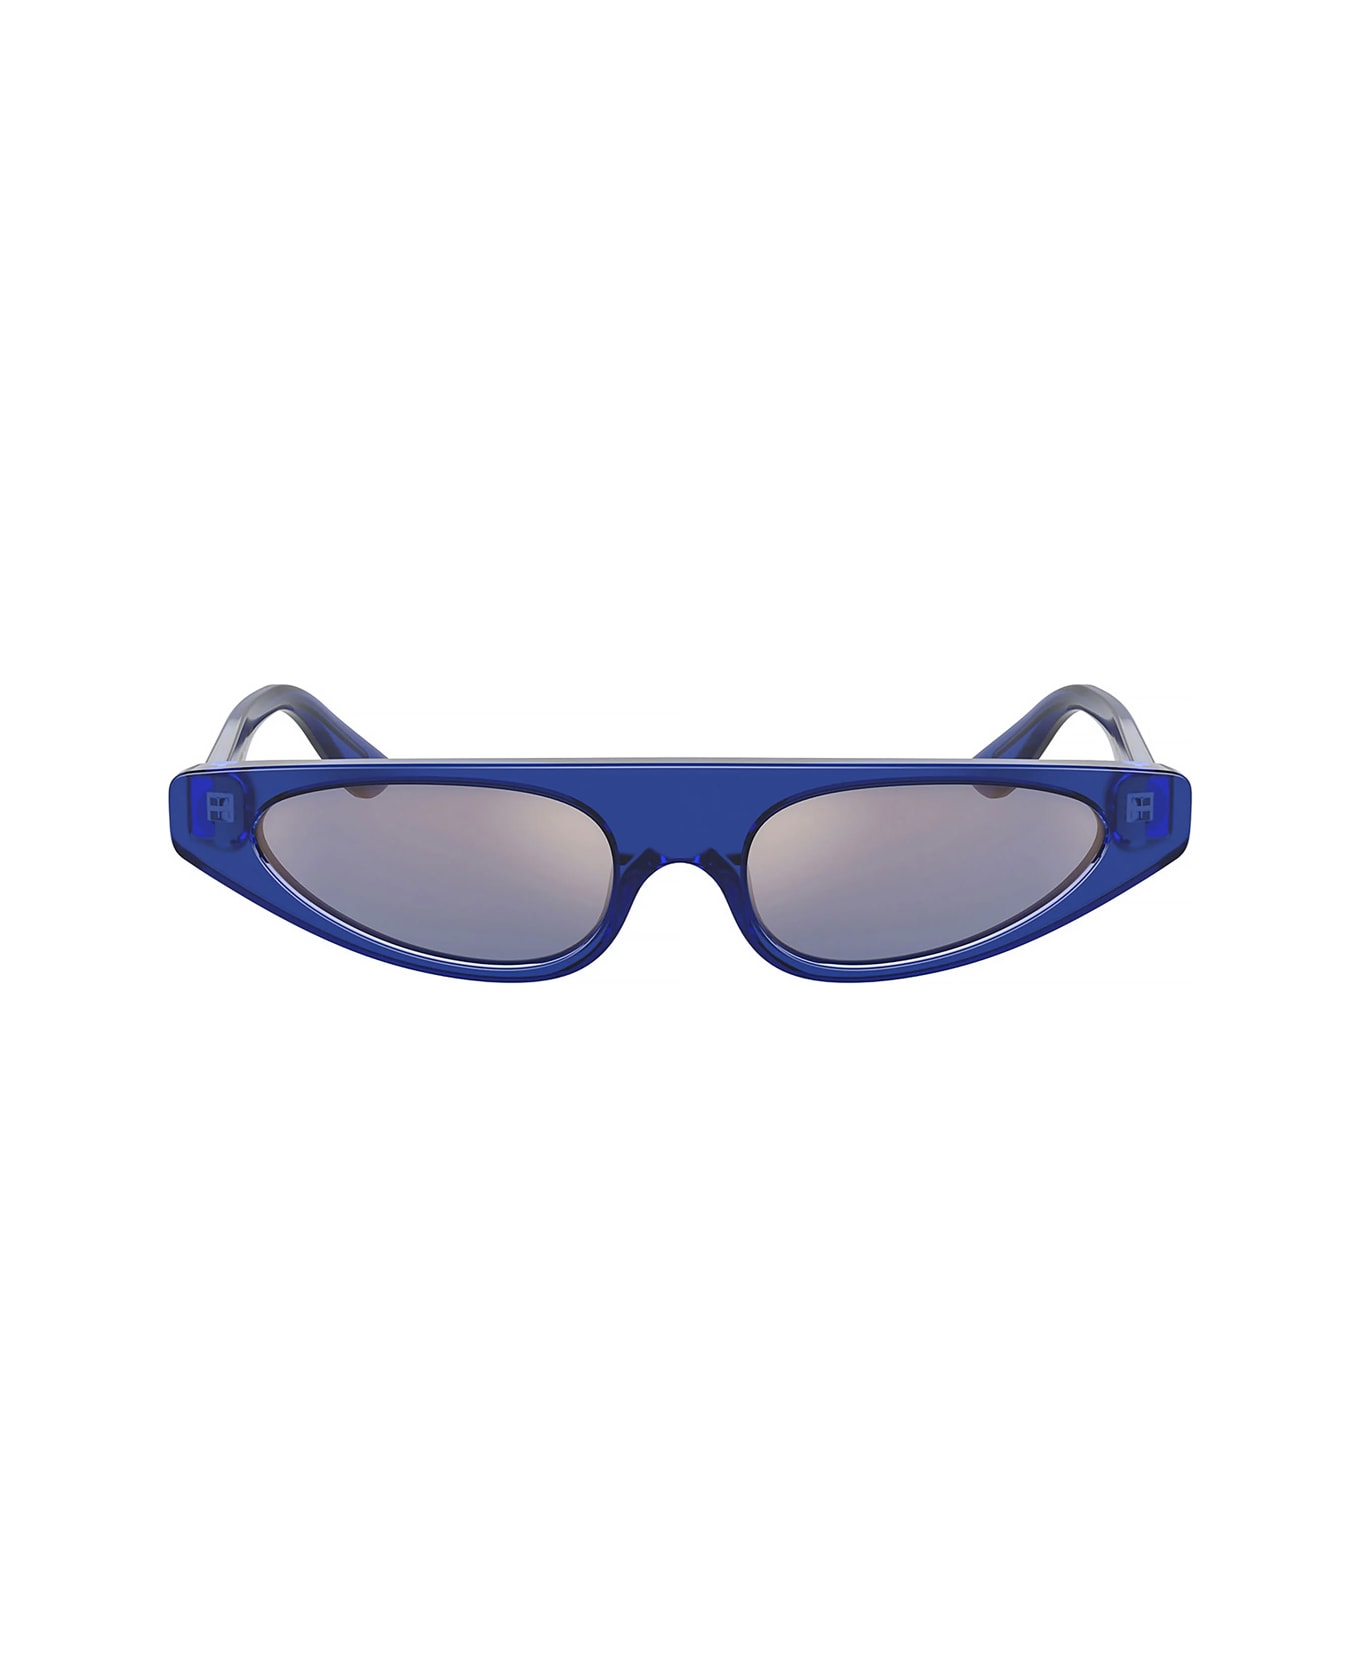 Dolce & Gabbana Eyewear Dg4442 339833 Sunglasses - Blu サングラス